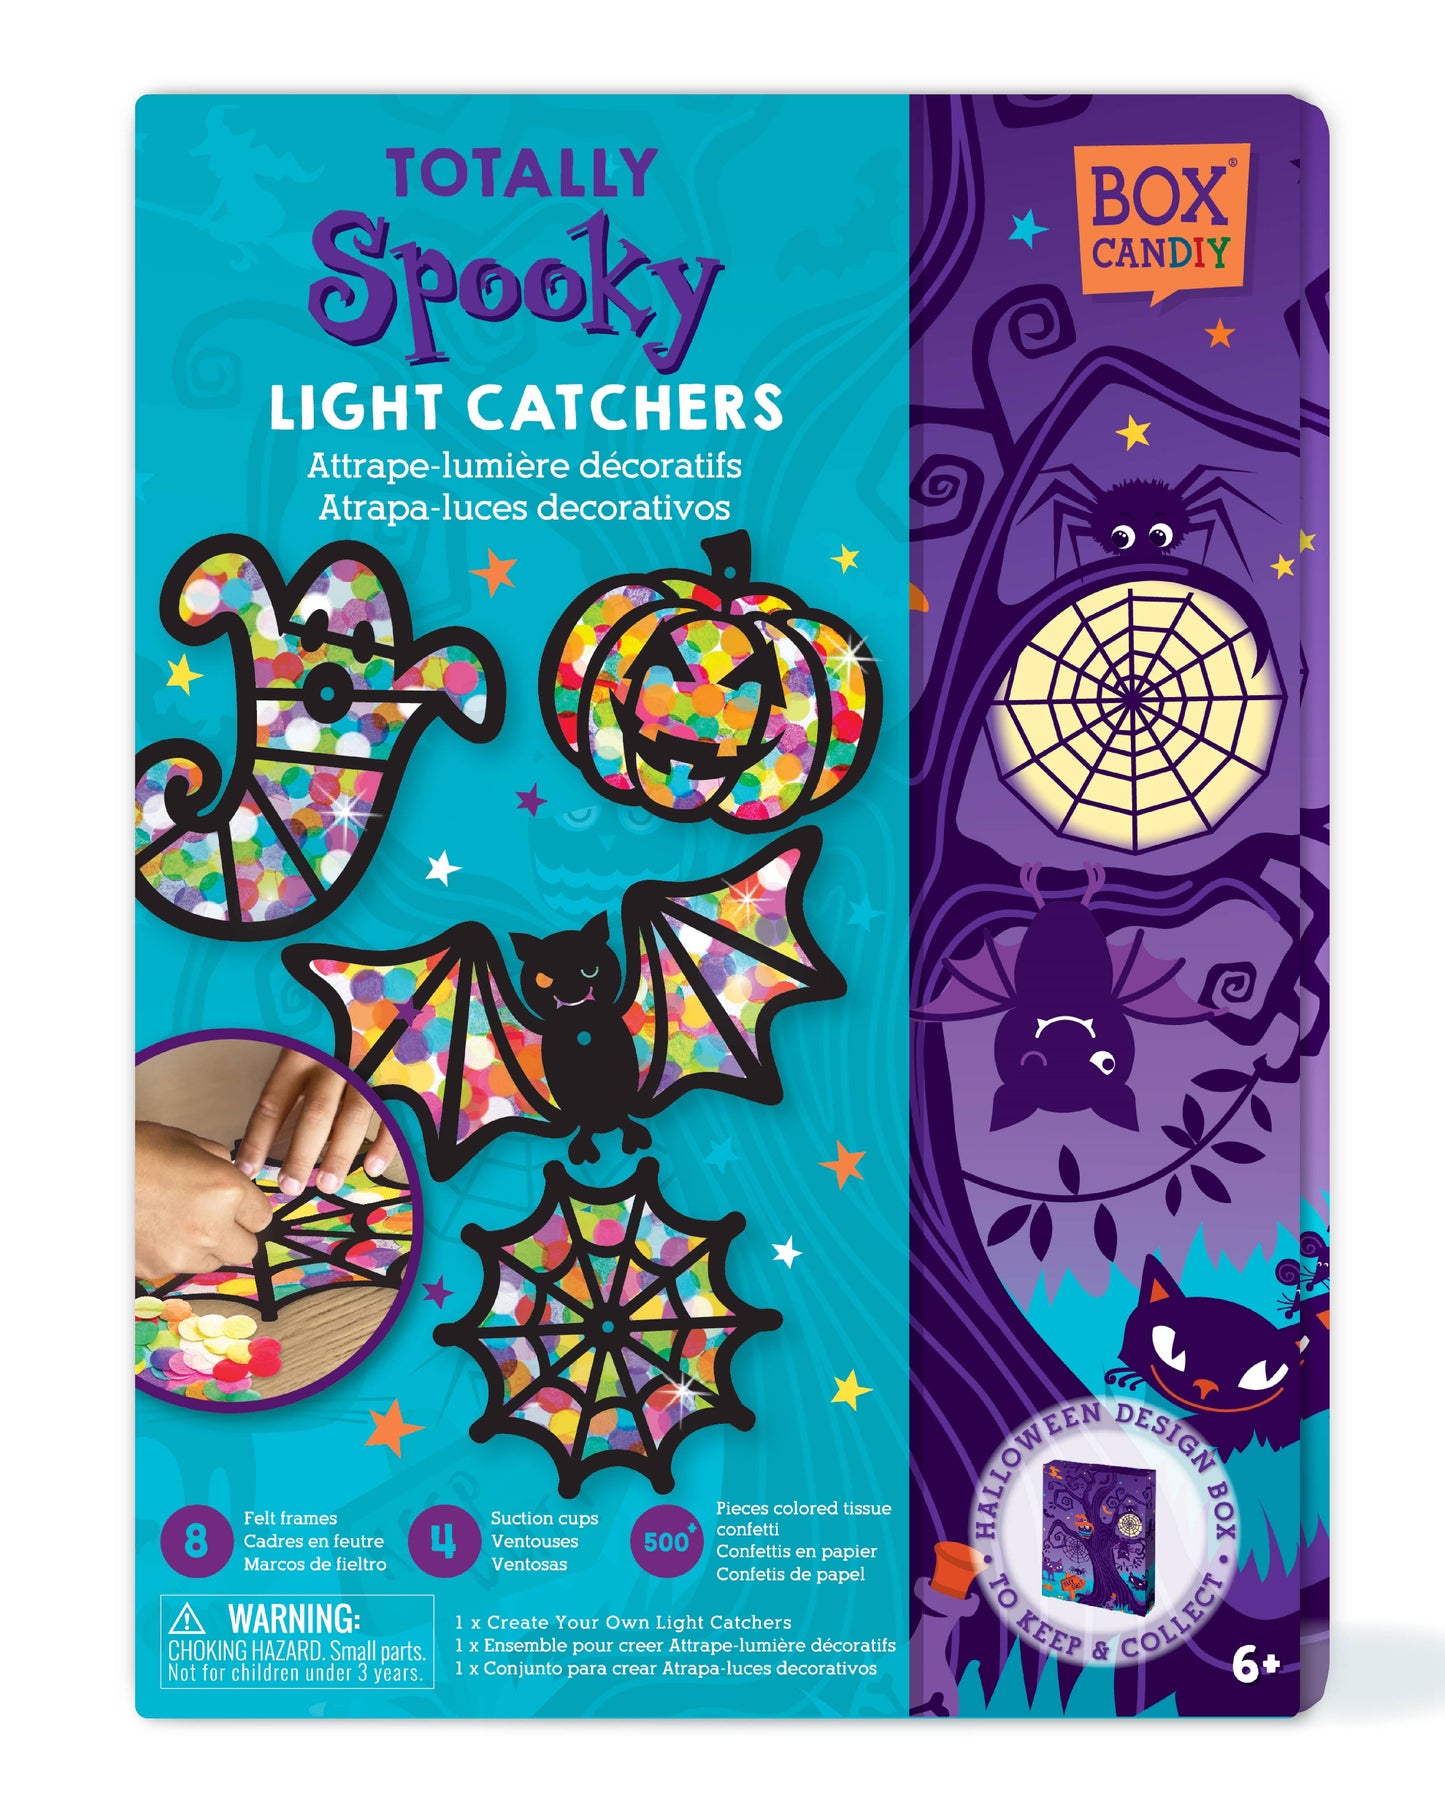 Totally Spooky Light Catchers